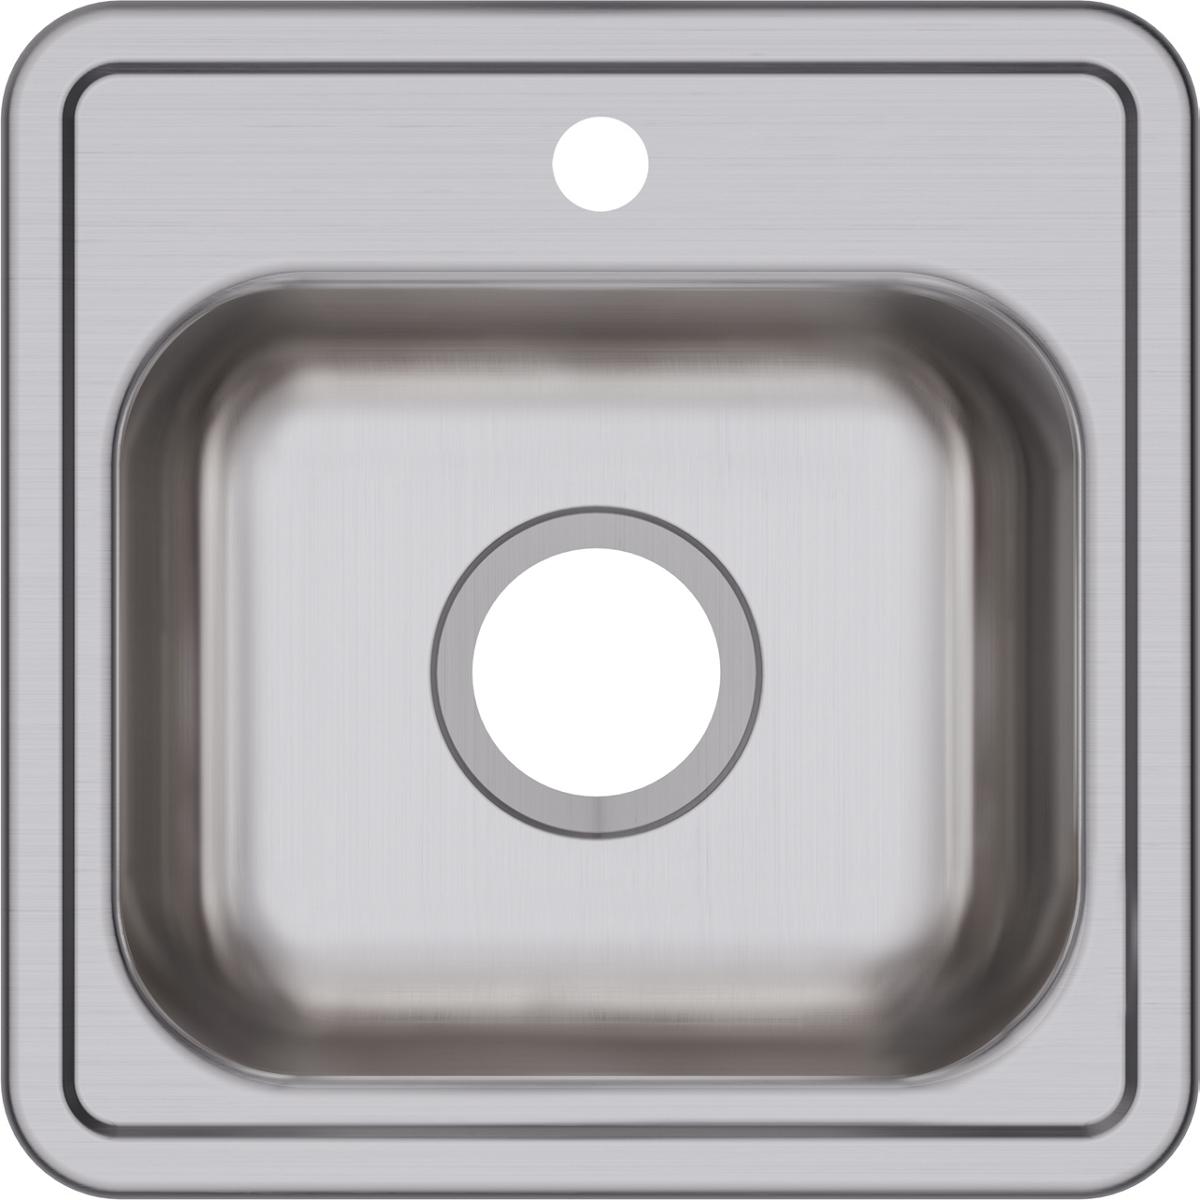 Elkay Dayton Stainless Steel 15" x 15" x 5-3/16" Single Bowl Drop-in Bar Sink